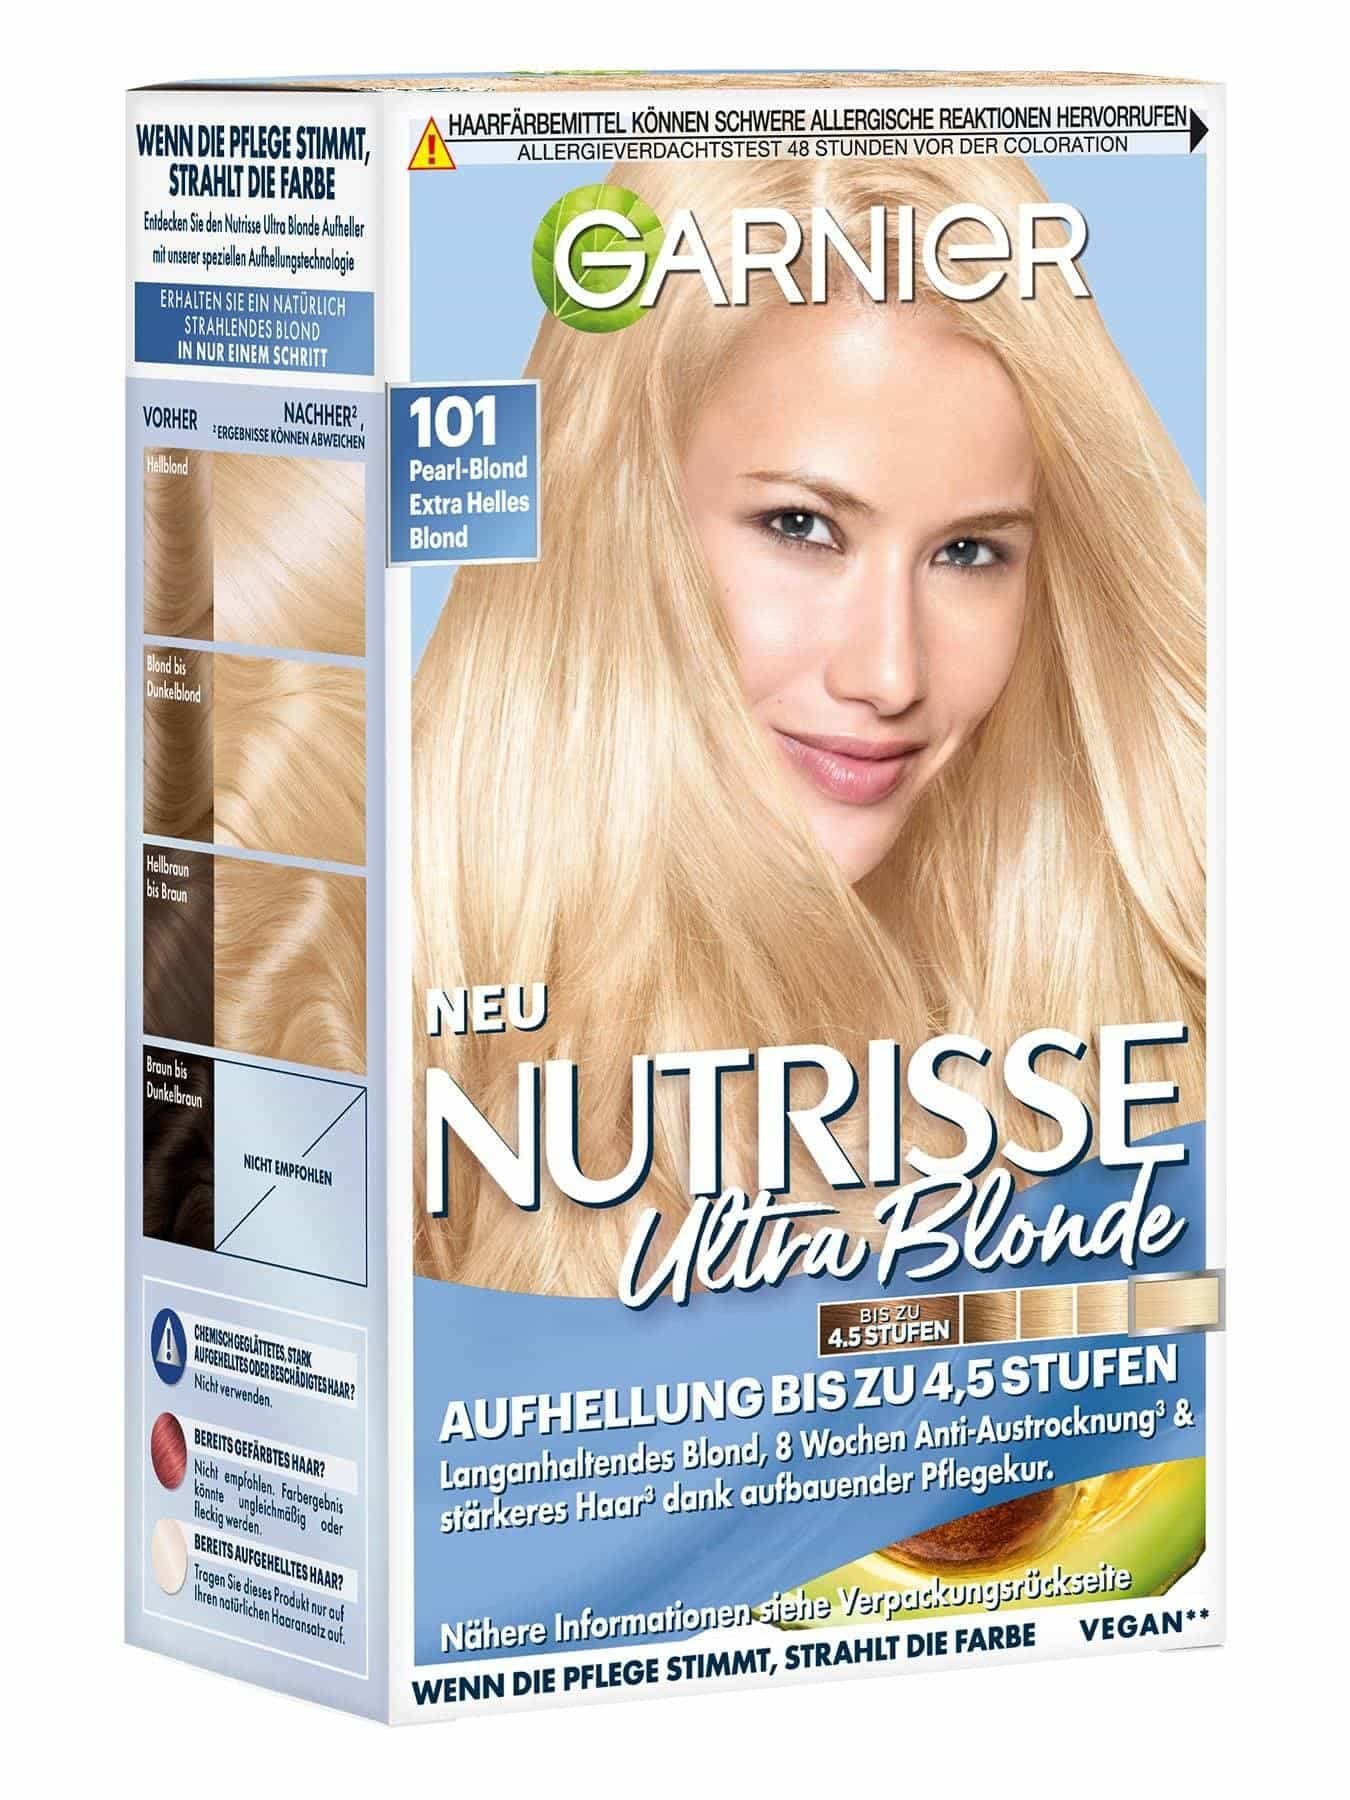 Nutrisse Ultra Crème Nr. 101 Blond Garnier Helles | Pearlblond Extra